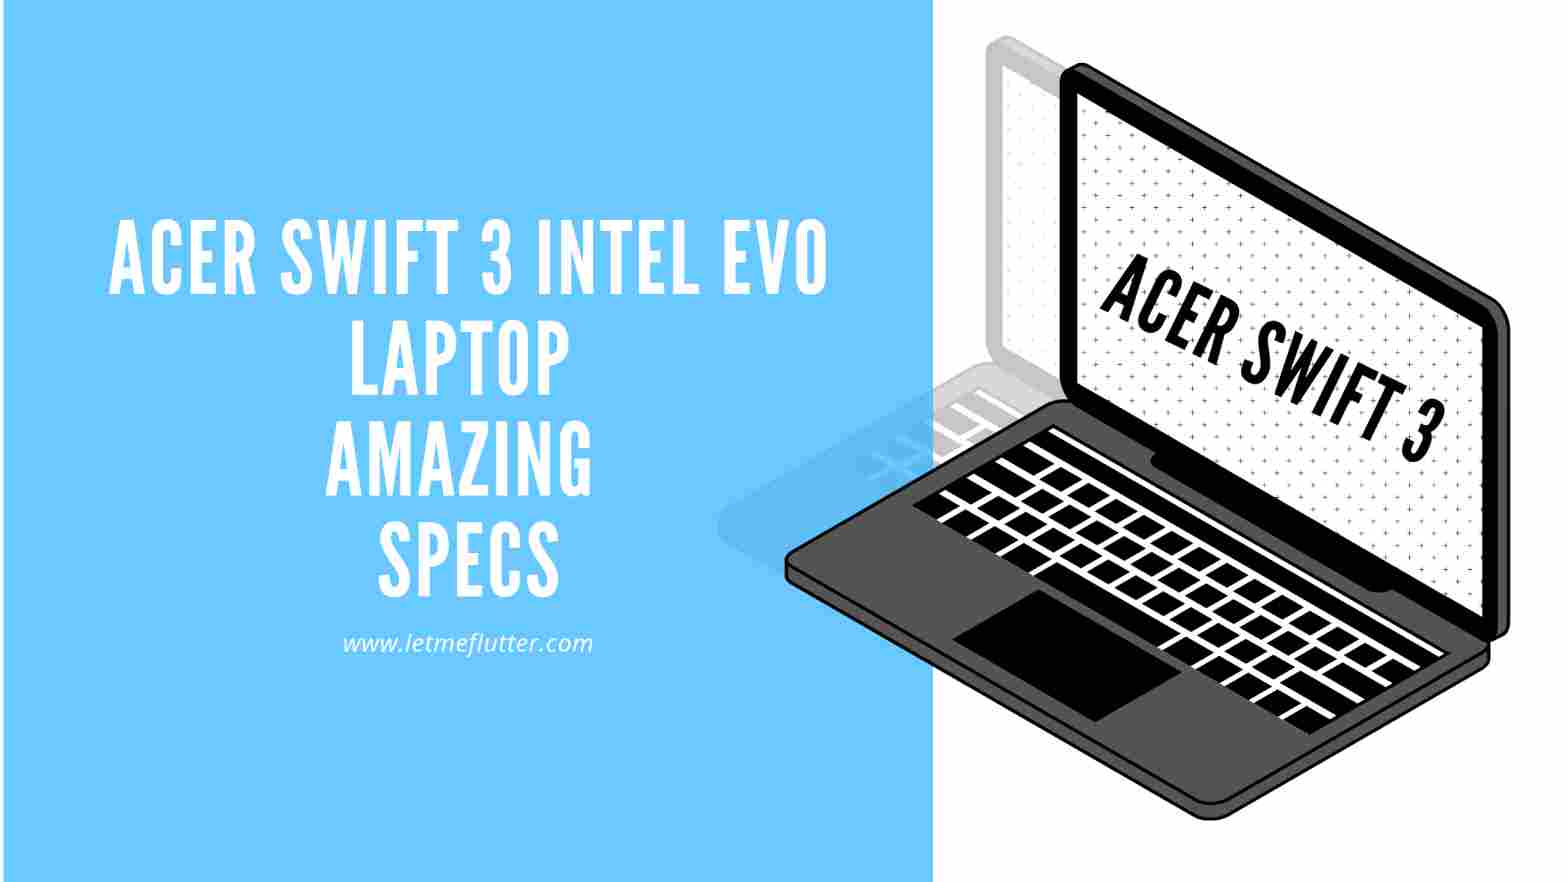 Acer Swift 3 Intel Evo laptop